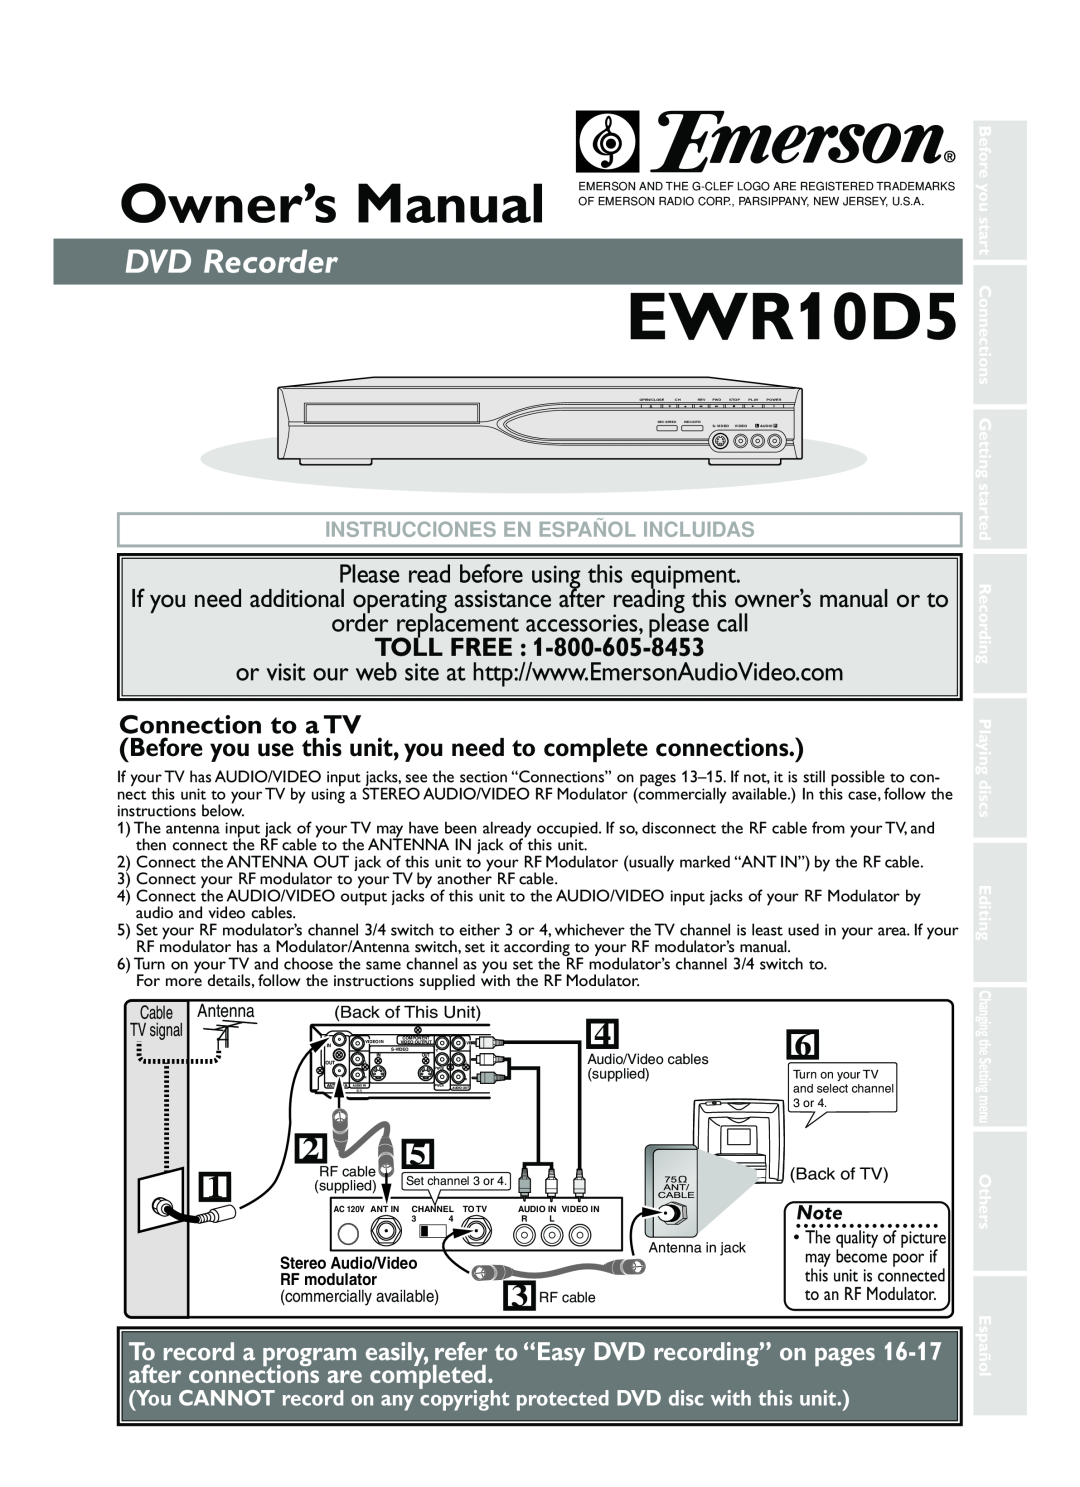 FUNAI EWR10D5 Owner’s Manual, DVD Recorder, Please read before using this equipment, Instrucciones En Español Incluidas 